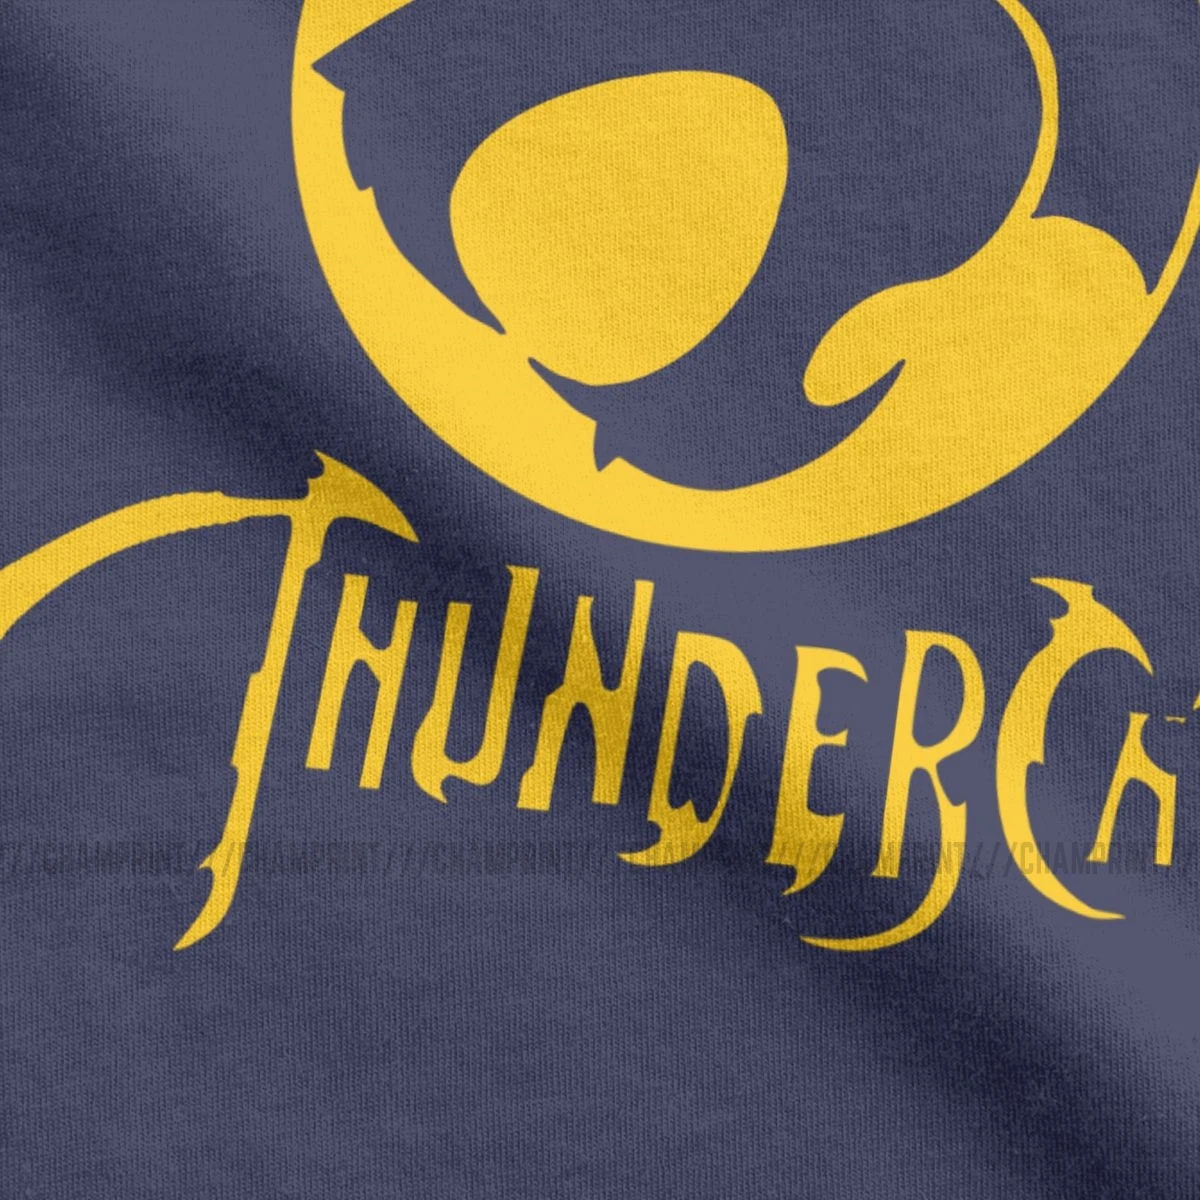 Moška T-Shirt Nov Anime Thundercats Smešno Bombaž Tees Kratek Rokav 80. Retro Risanka T Srajce O Vratu Oblačila Original